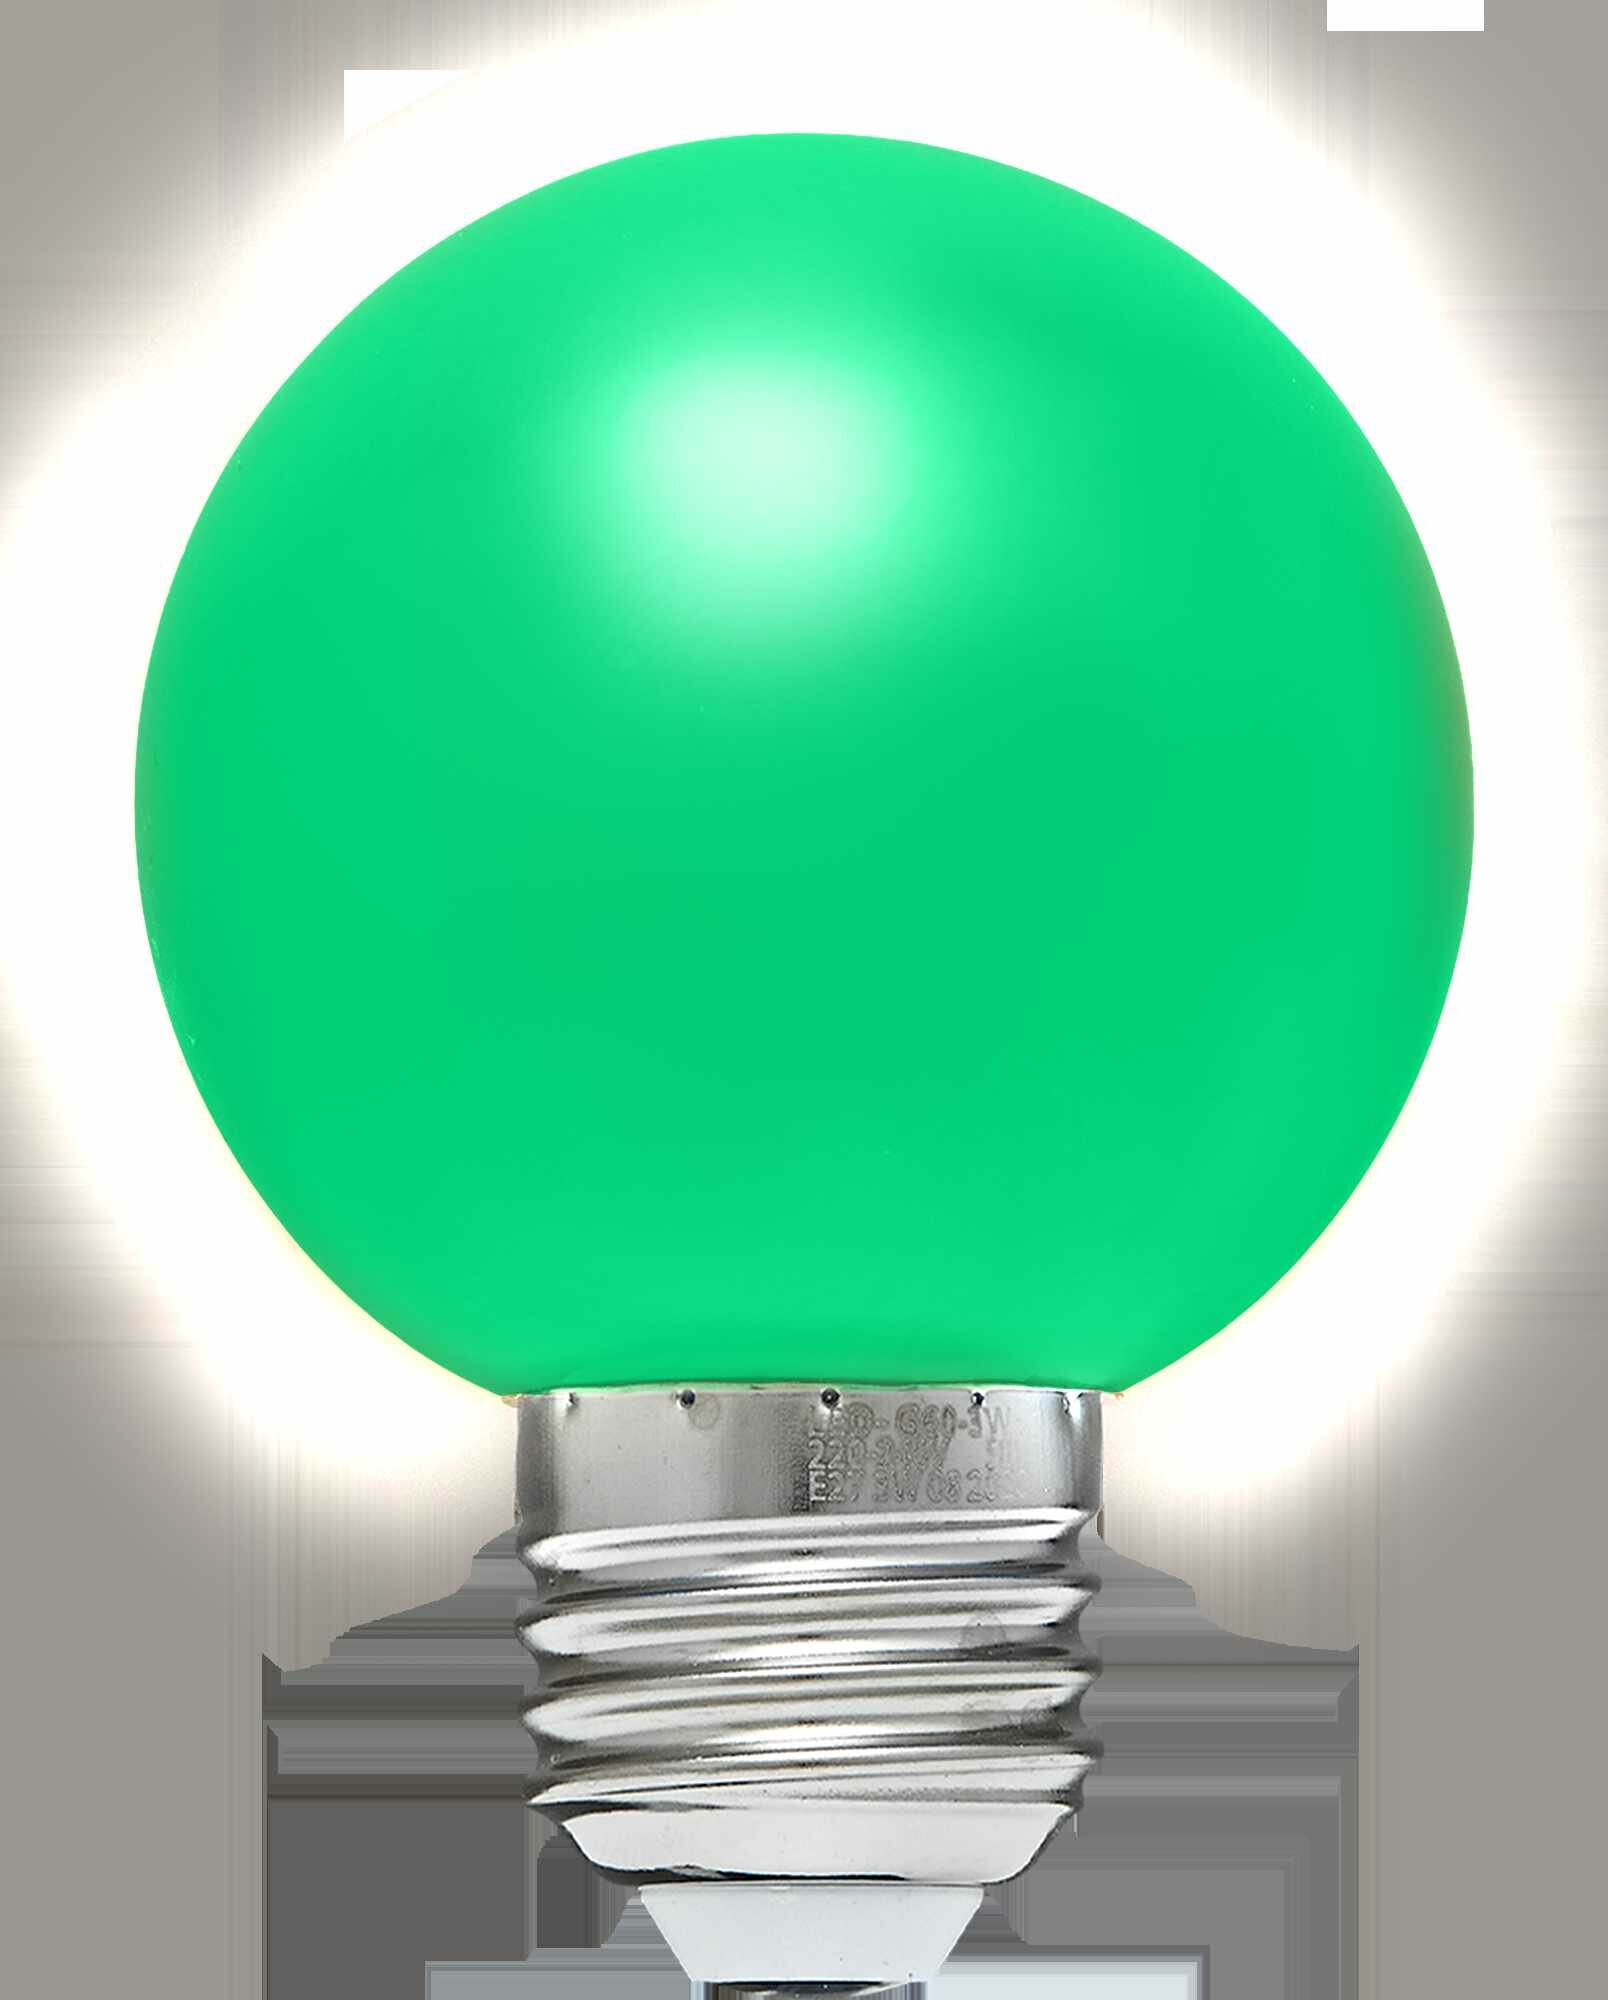 Лампа светодиодная Volpe E27 3 Вт шар 240 Лм зелёный свет